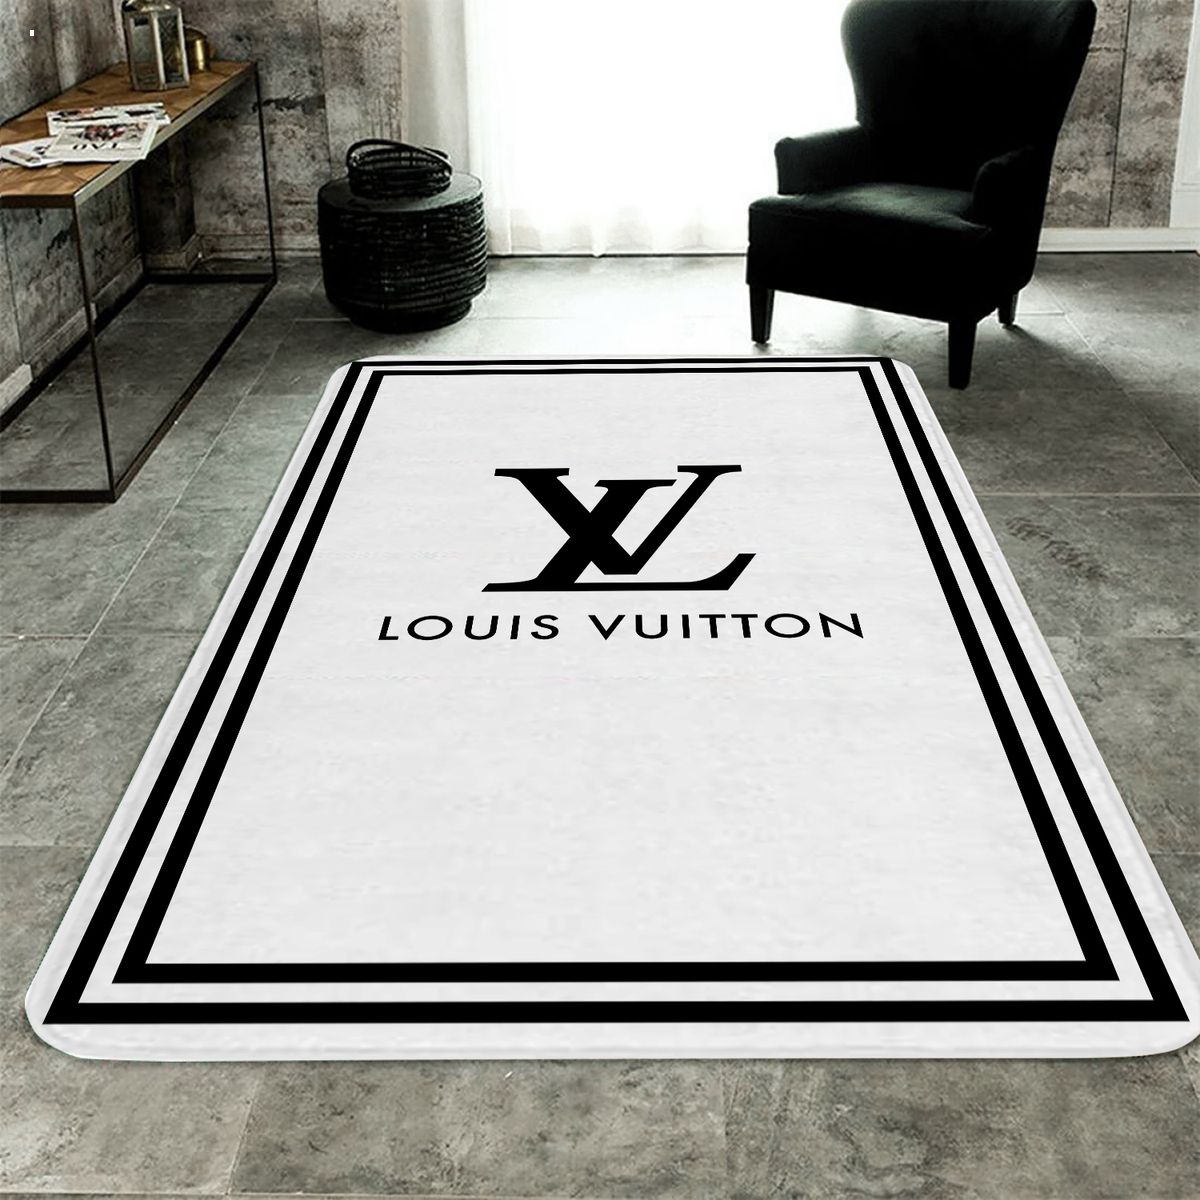 Louis Vuitton Black White Luxury Brand Carpet Rug Limited Edition